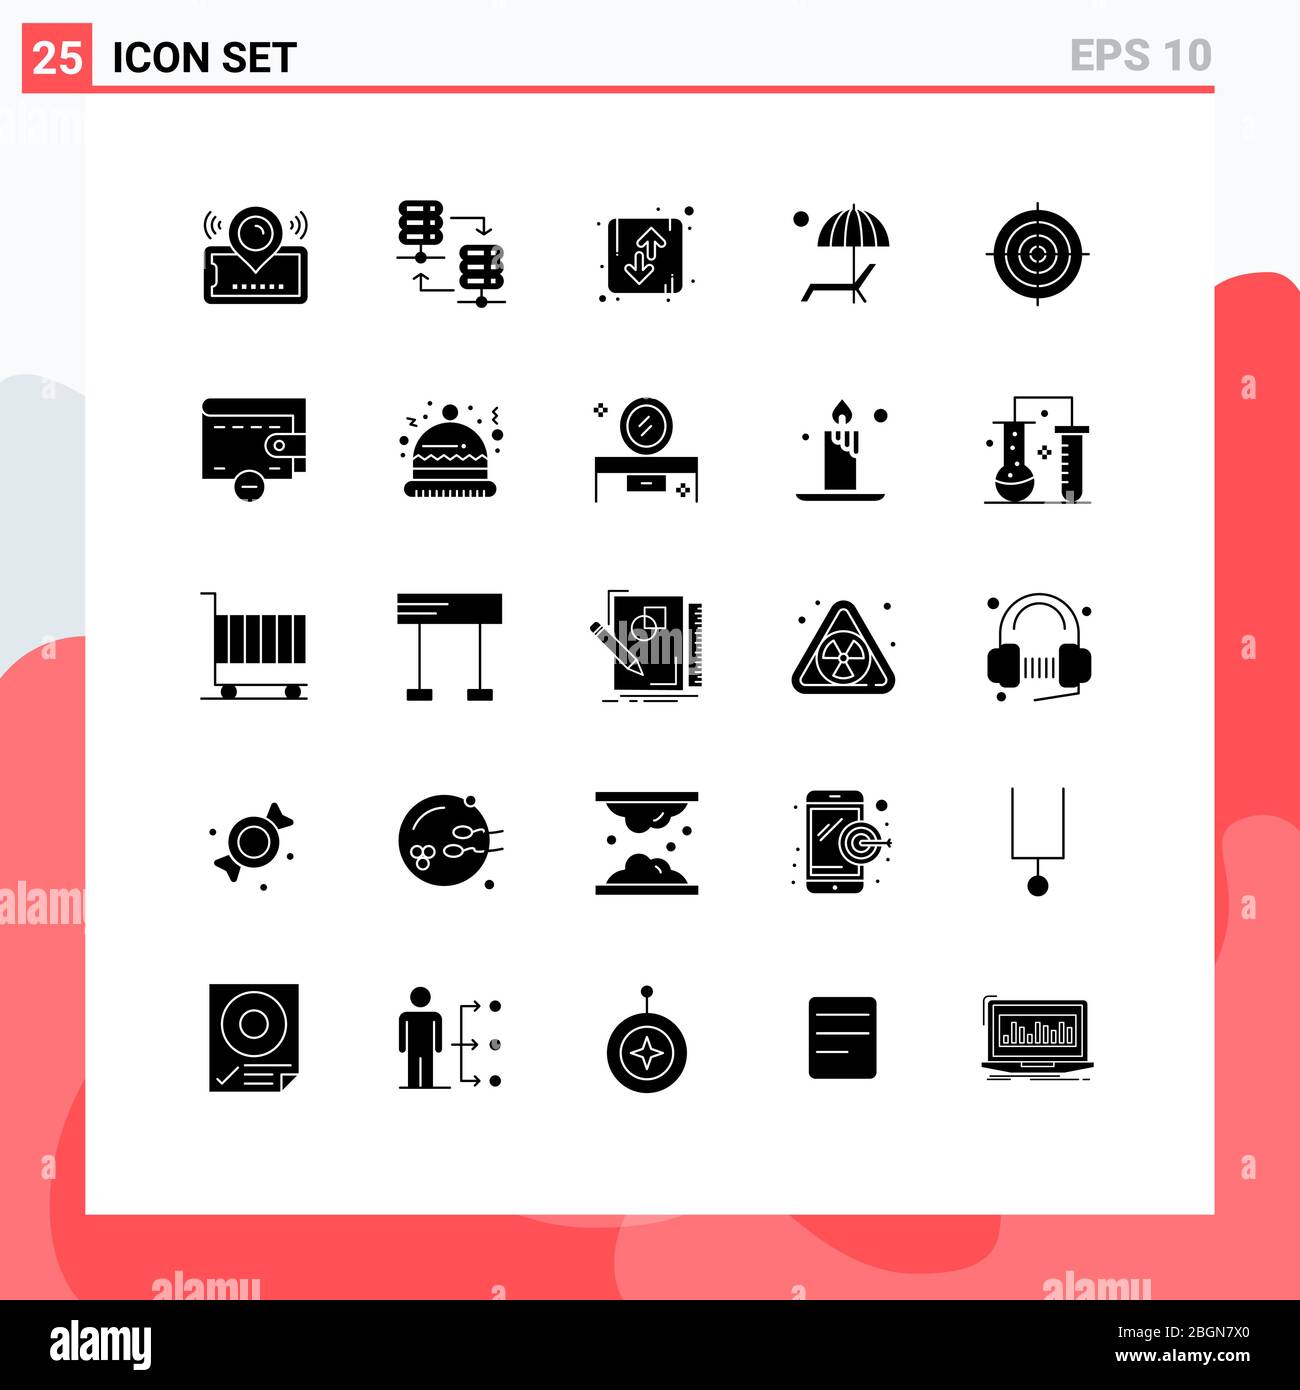 Pictogram Set of 25 Simple Solid Glyphs of enjoy, umbrella, share, beanch, orientation Editable Vector Design Elements Stock Vector